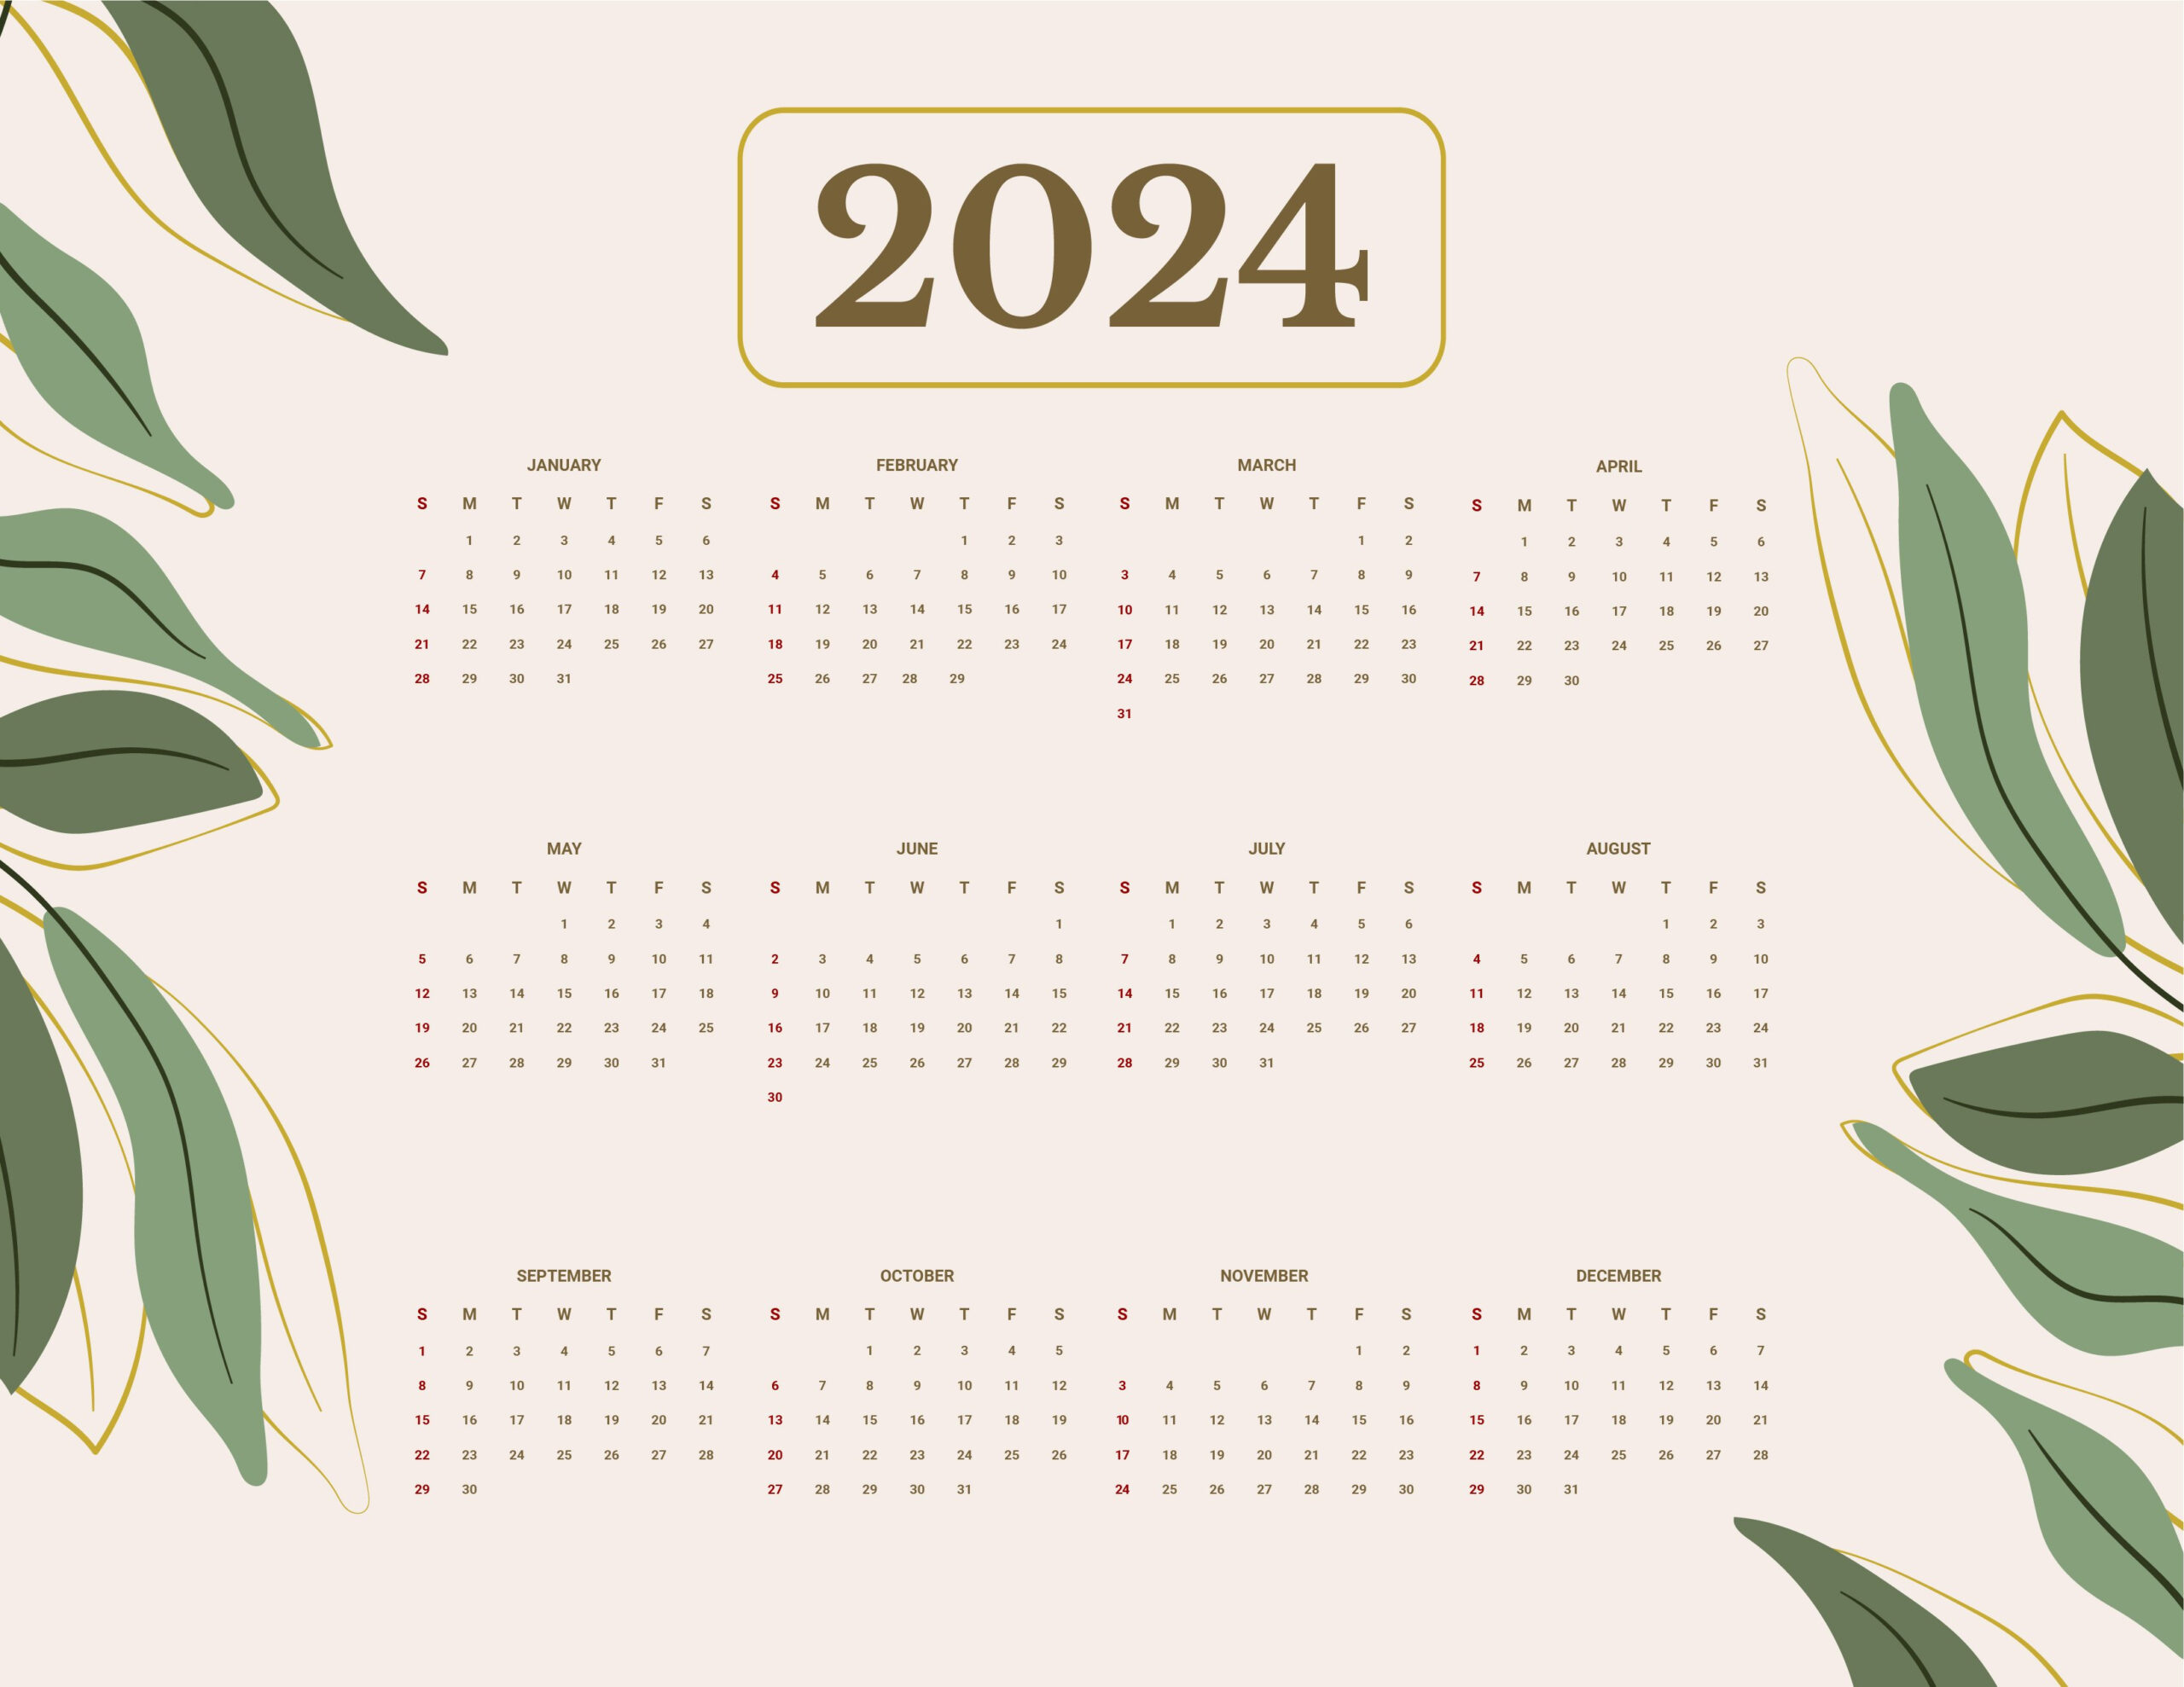 2024 Calendar Template In Word - Free Download | Template | 2024 Annual Calendar Template Word